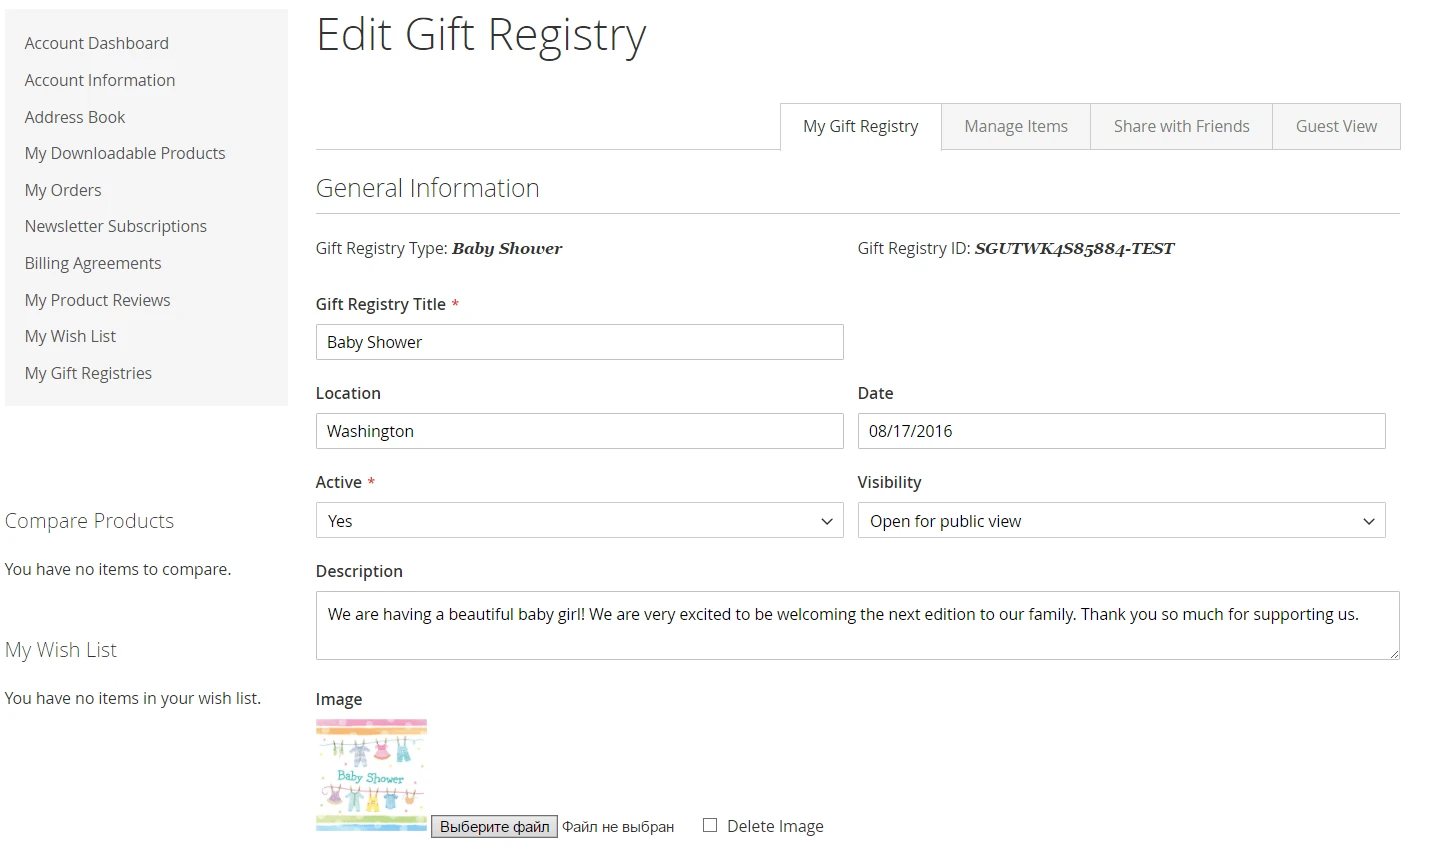 Editing Gift Registry